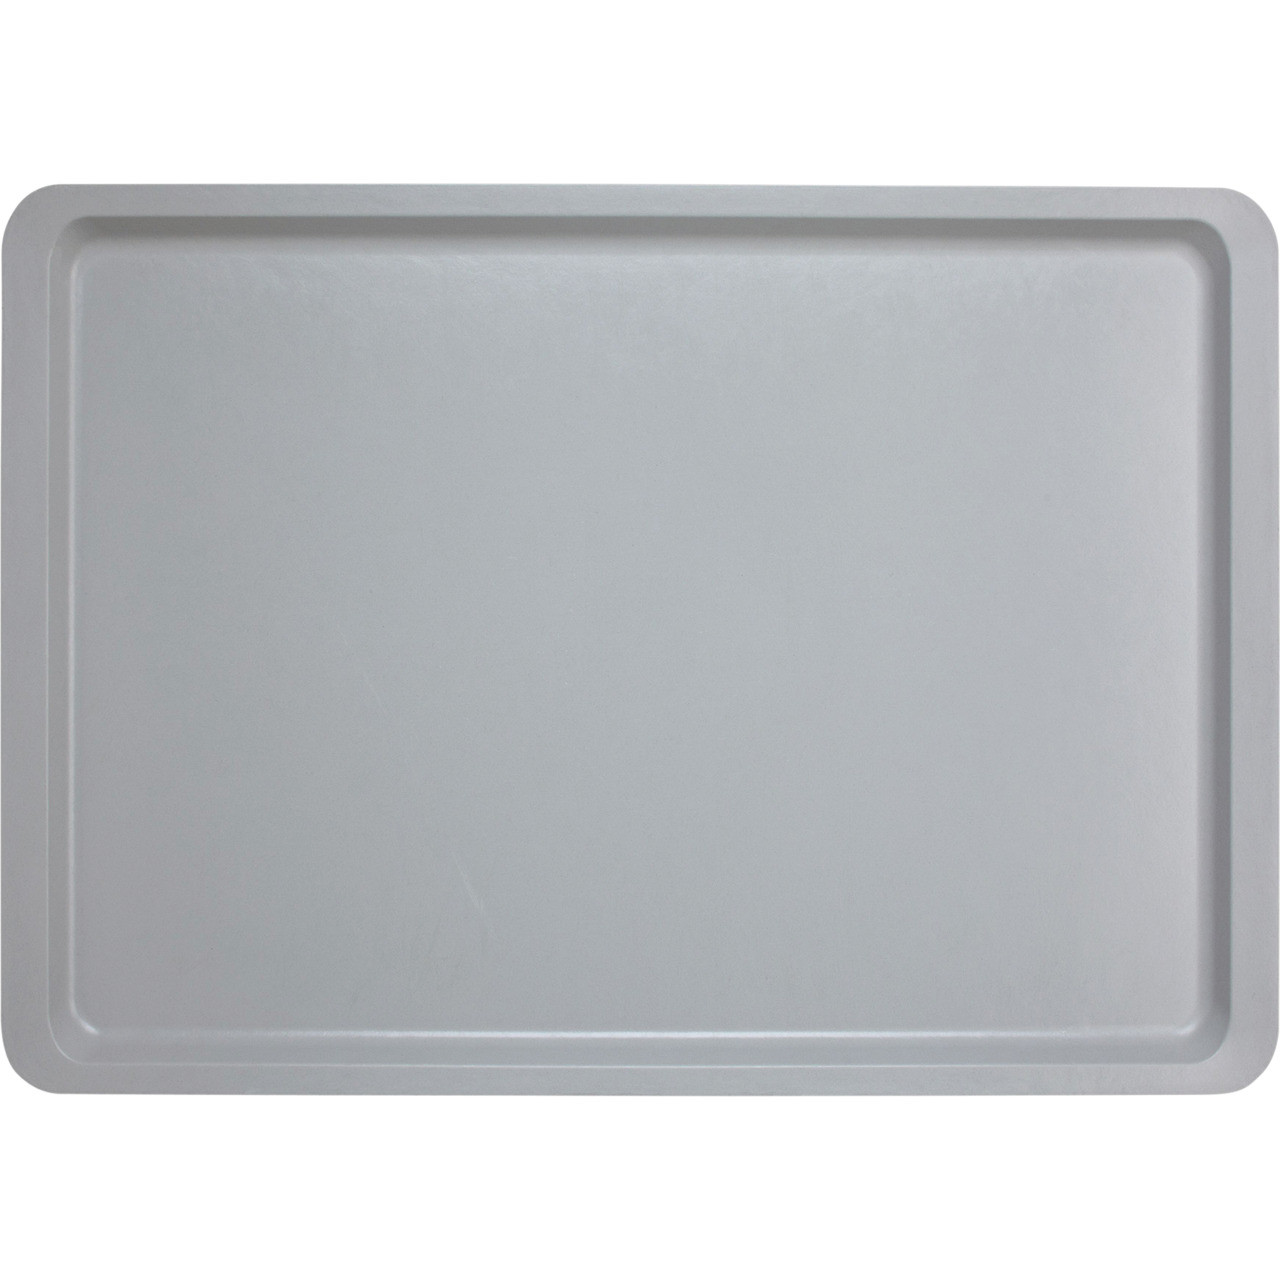 Tablett Polyester Versa glatt 425 x 325 mm lichtgrau